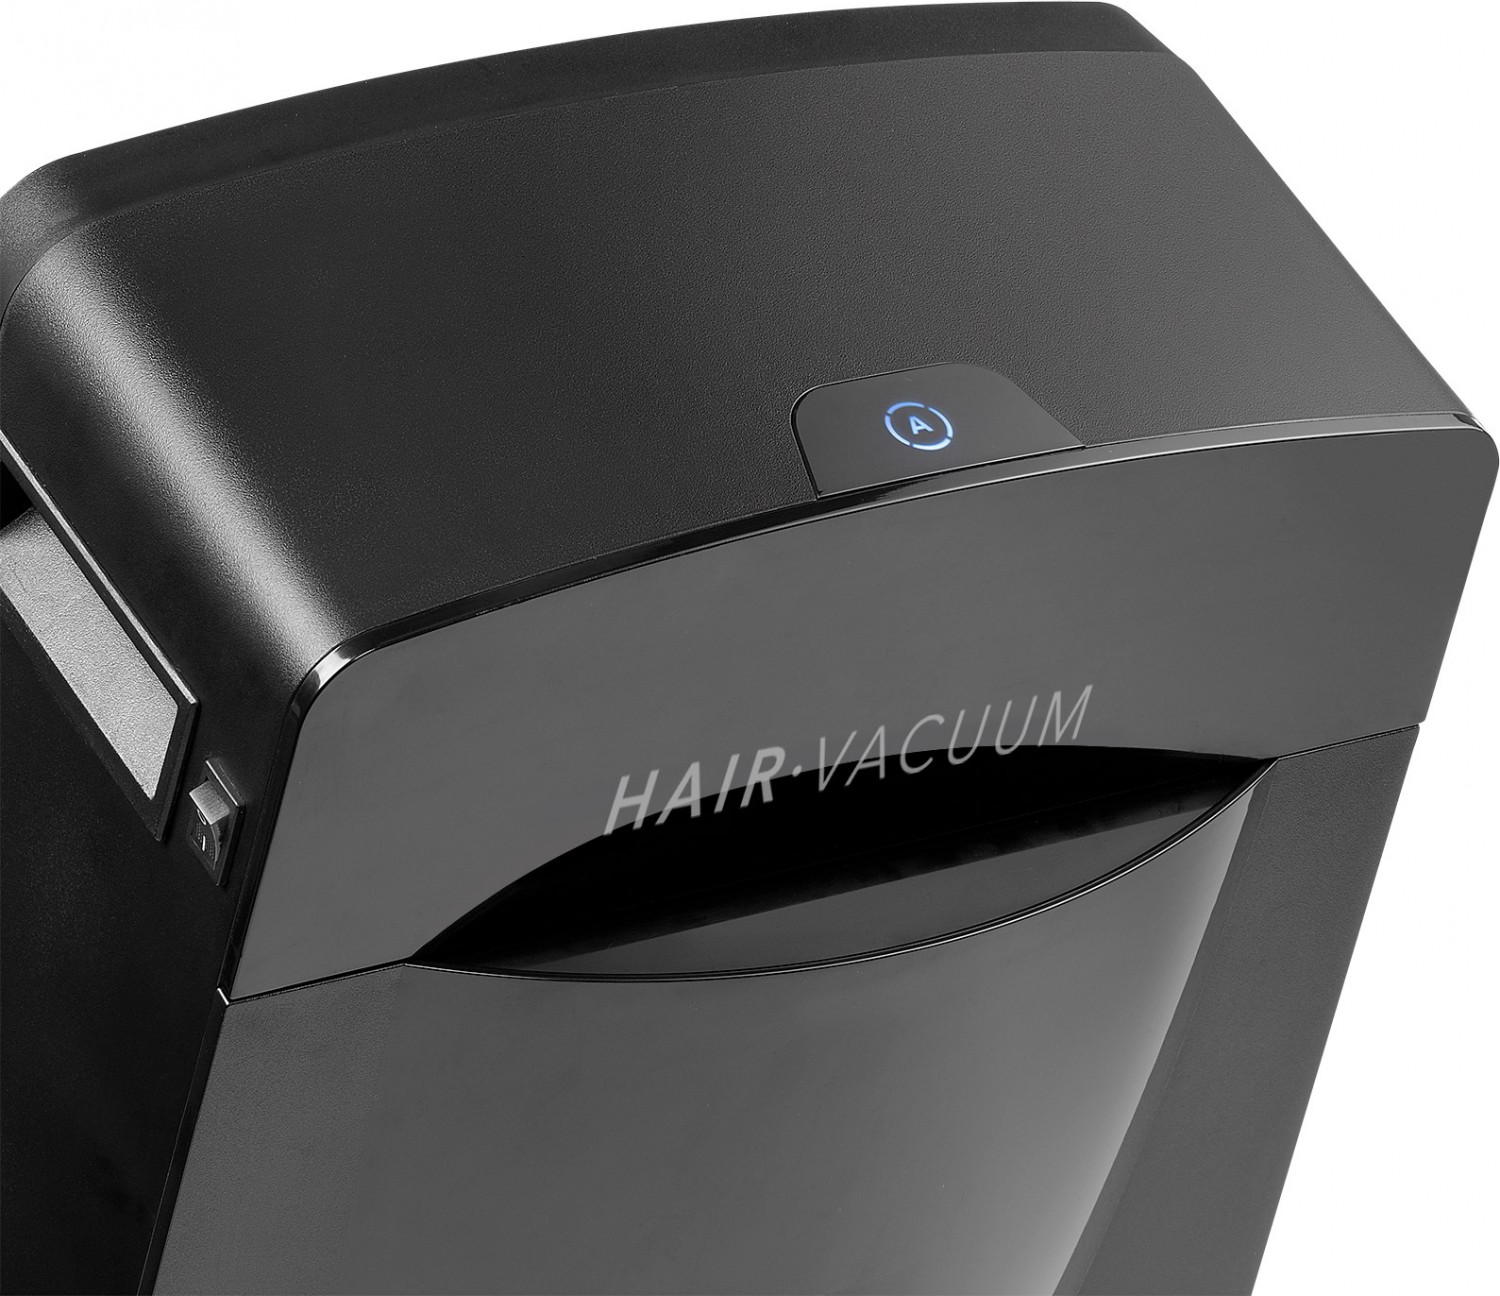  Sibel Hair Vacuum Suction dustbin for hair 1200W 